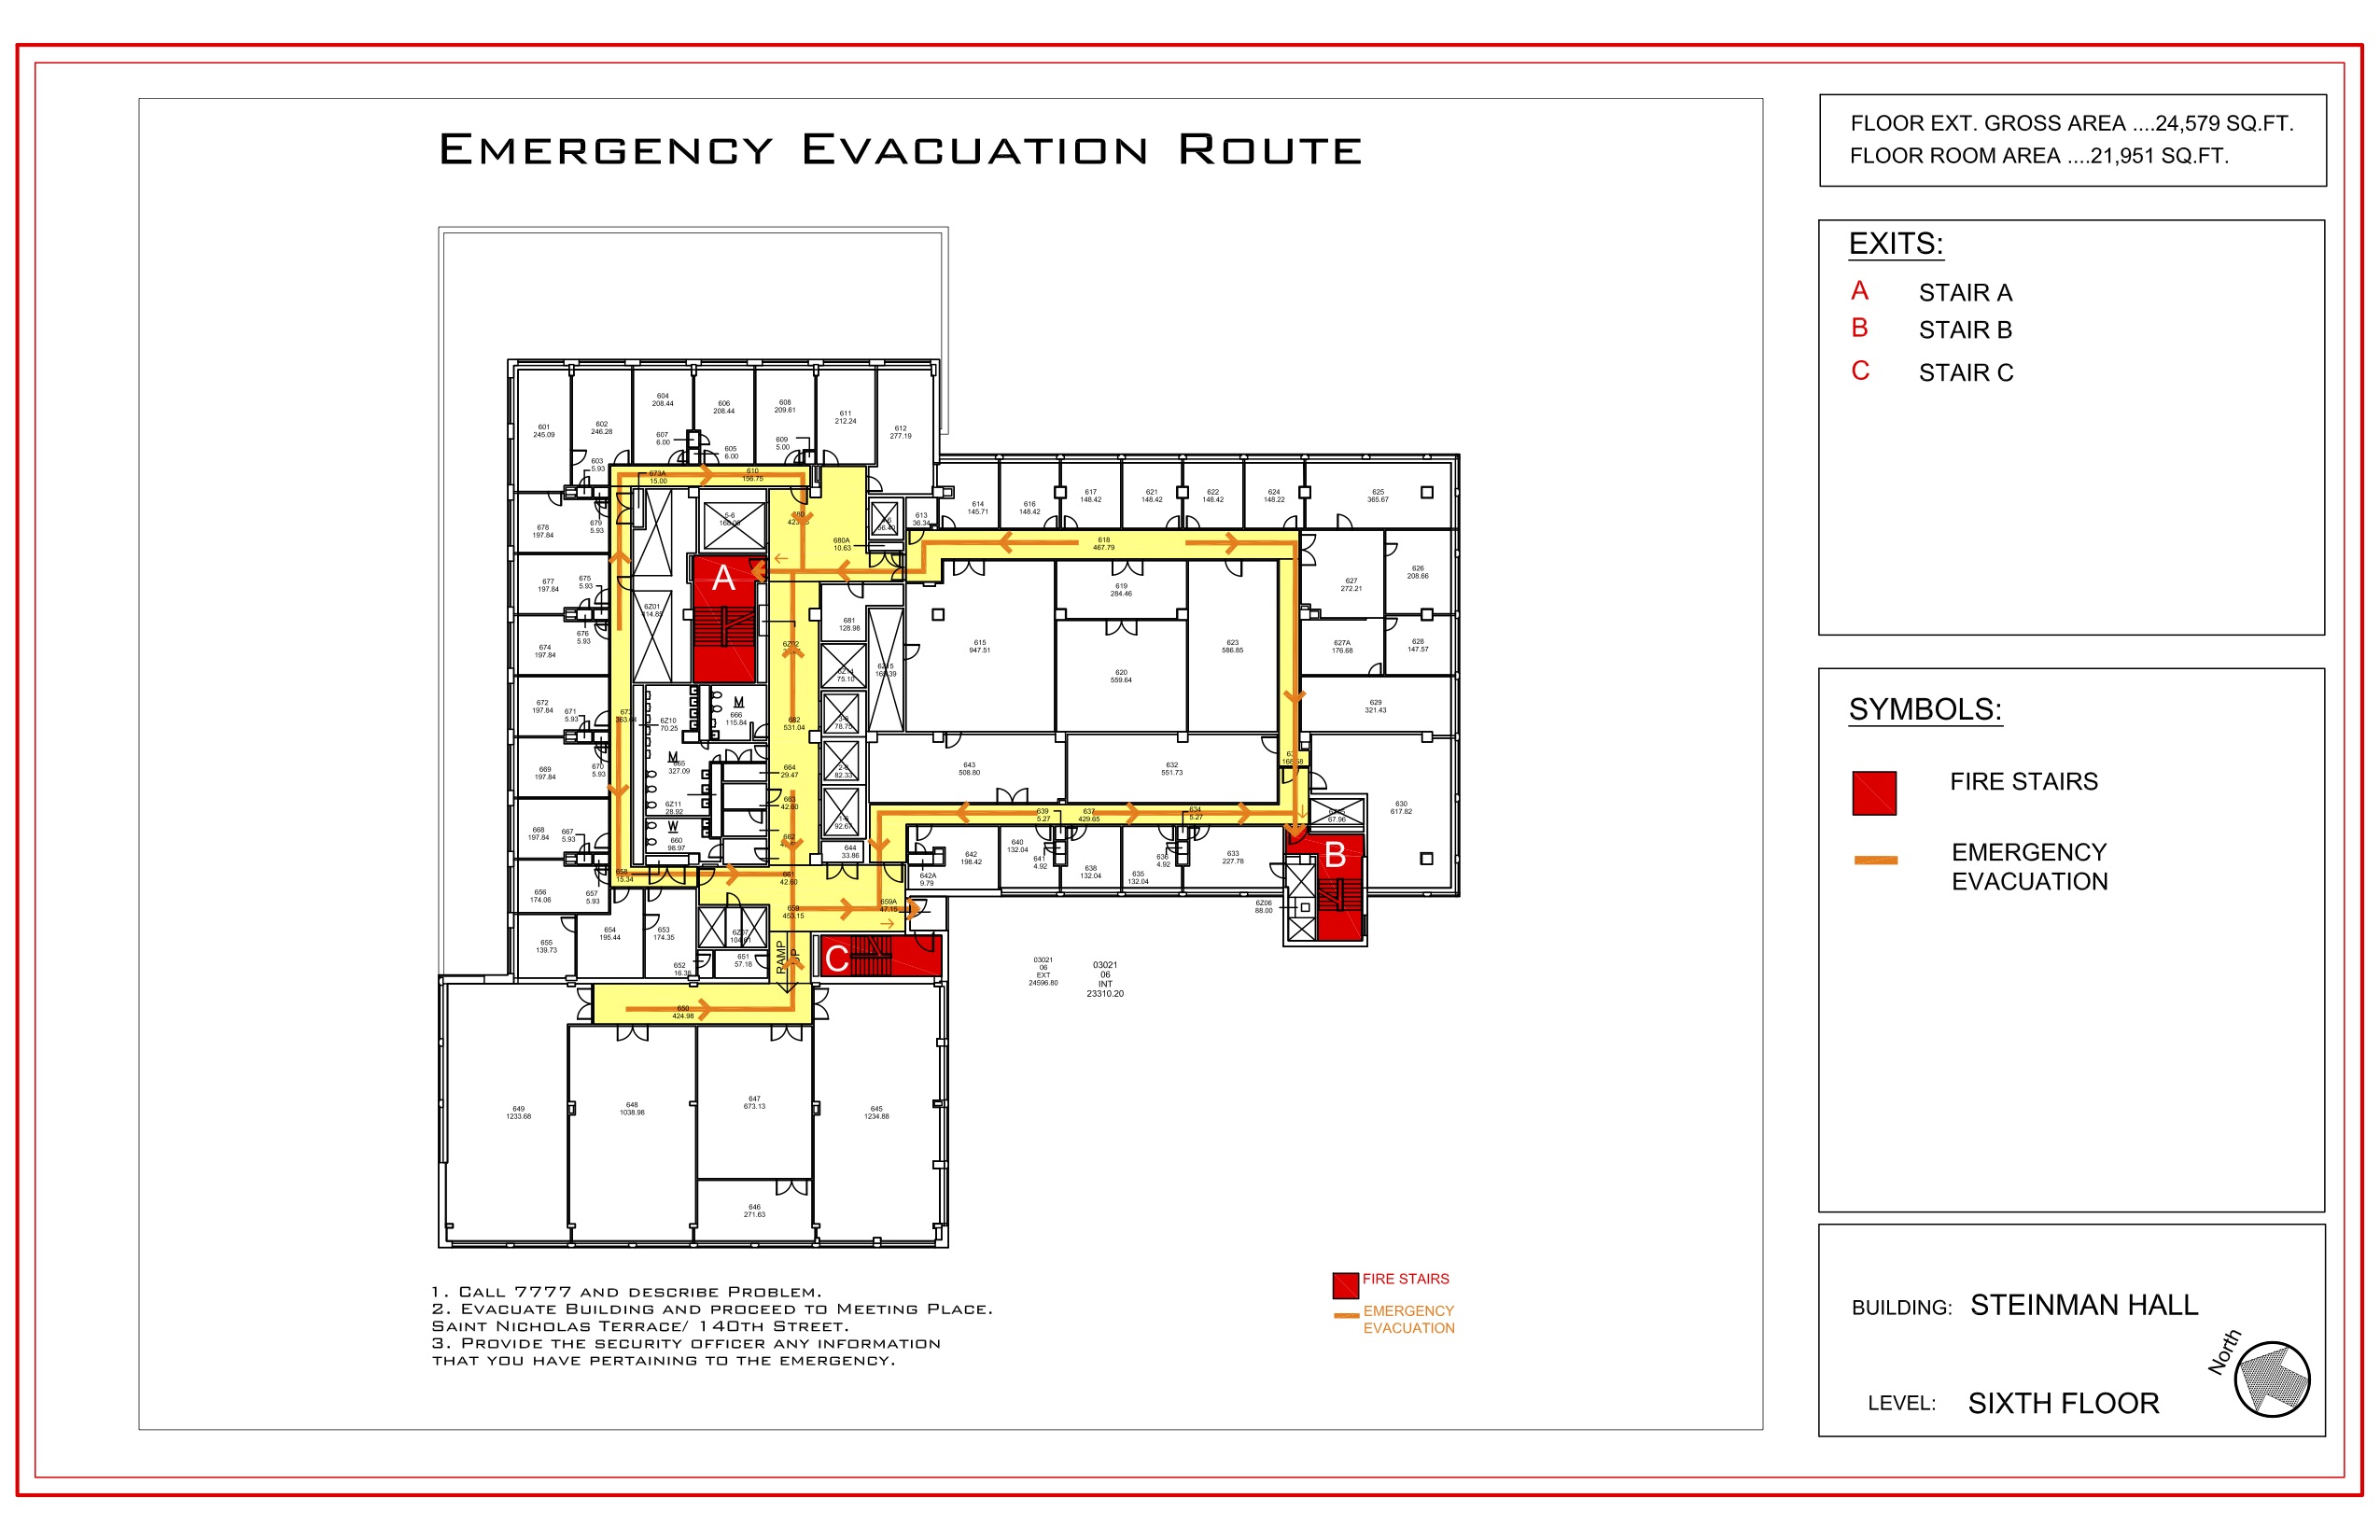 Steinman - Evacuation Route 9